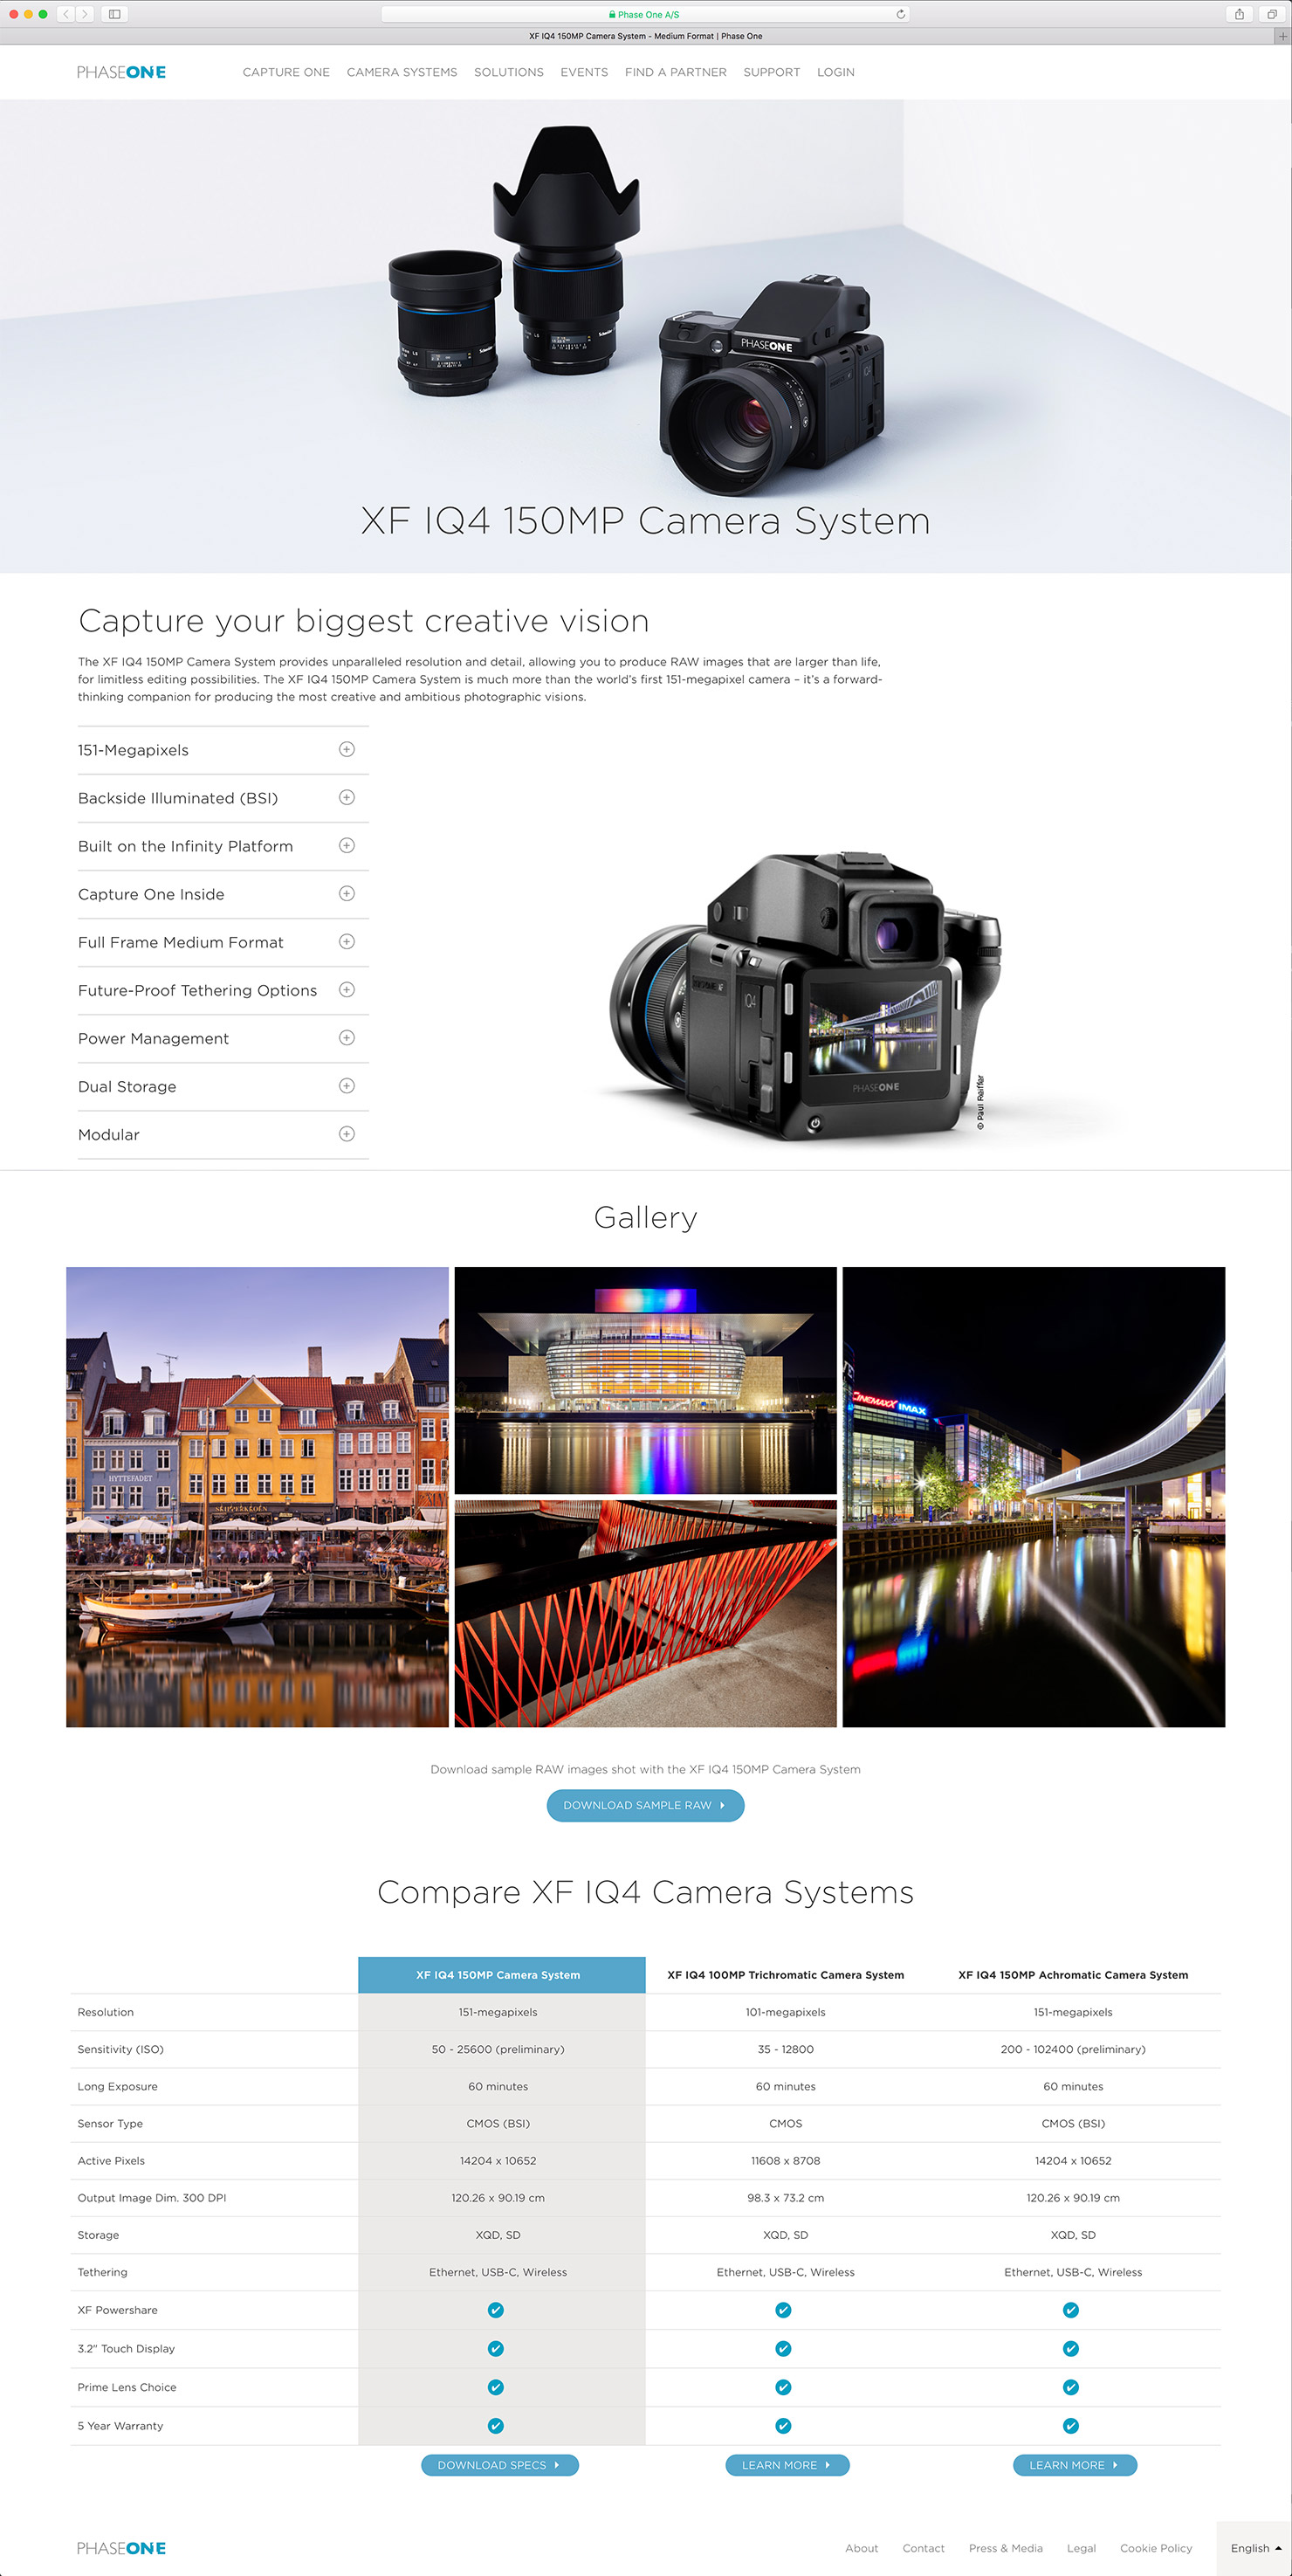 phase one IQ4 150MP infinity platform website paul reiffer launch 2018 photographer medium format